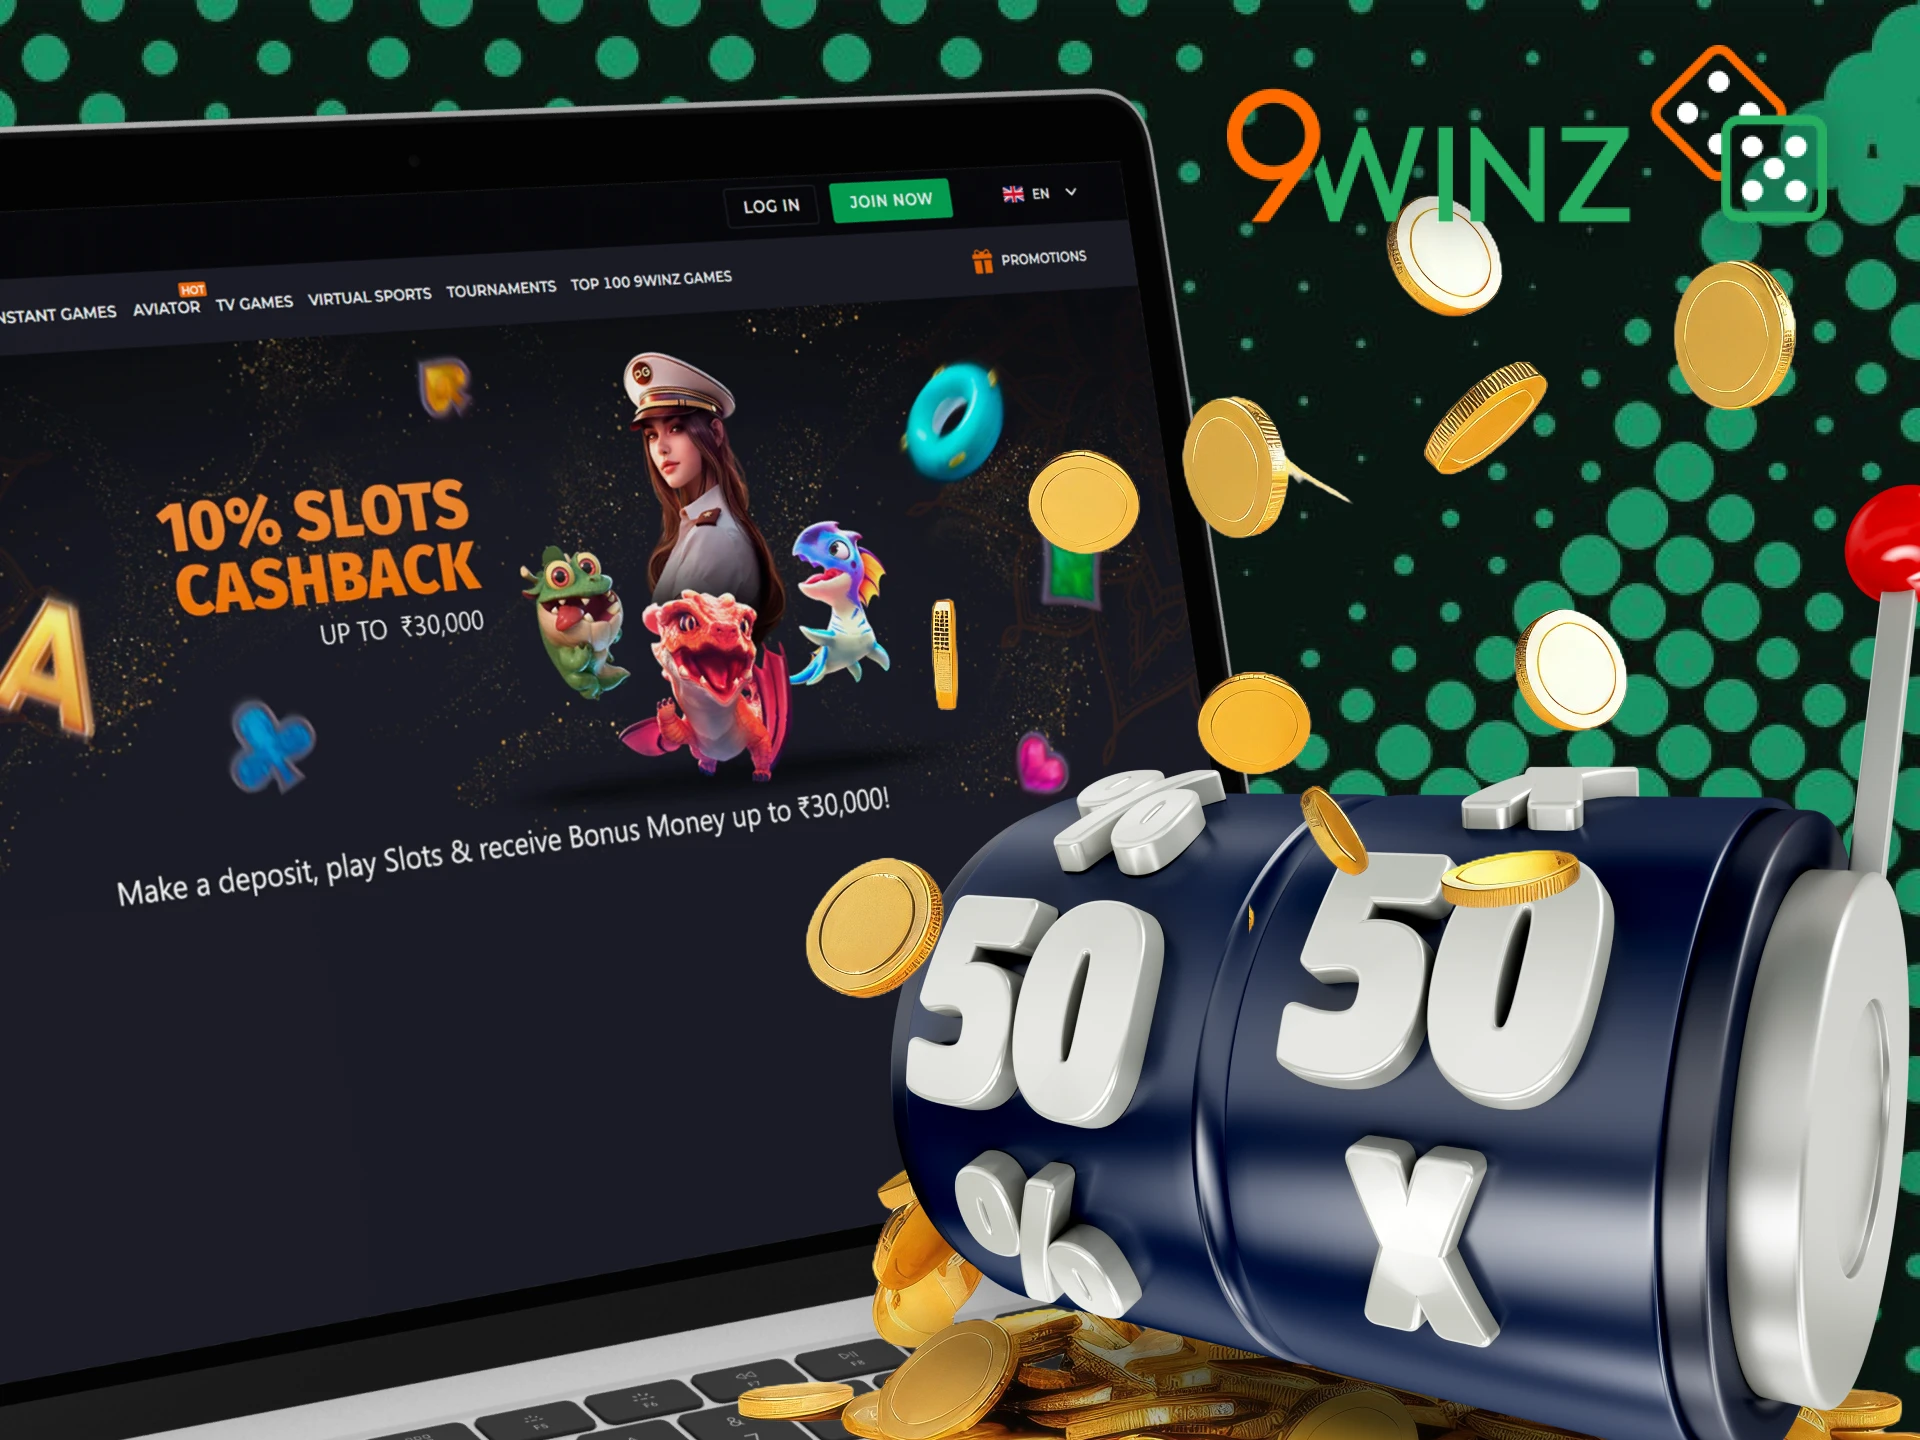 9Winz Casino offers lucrative slots cashback.